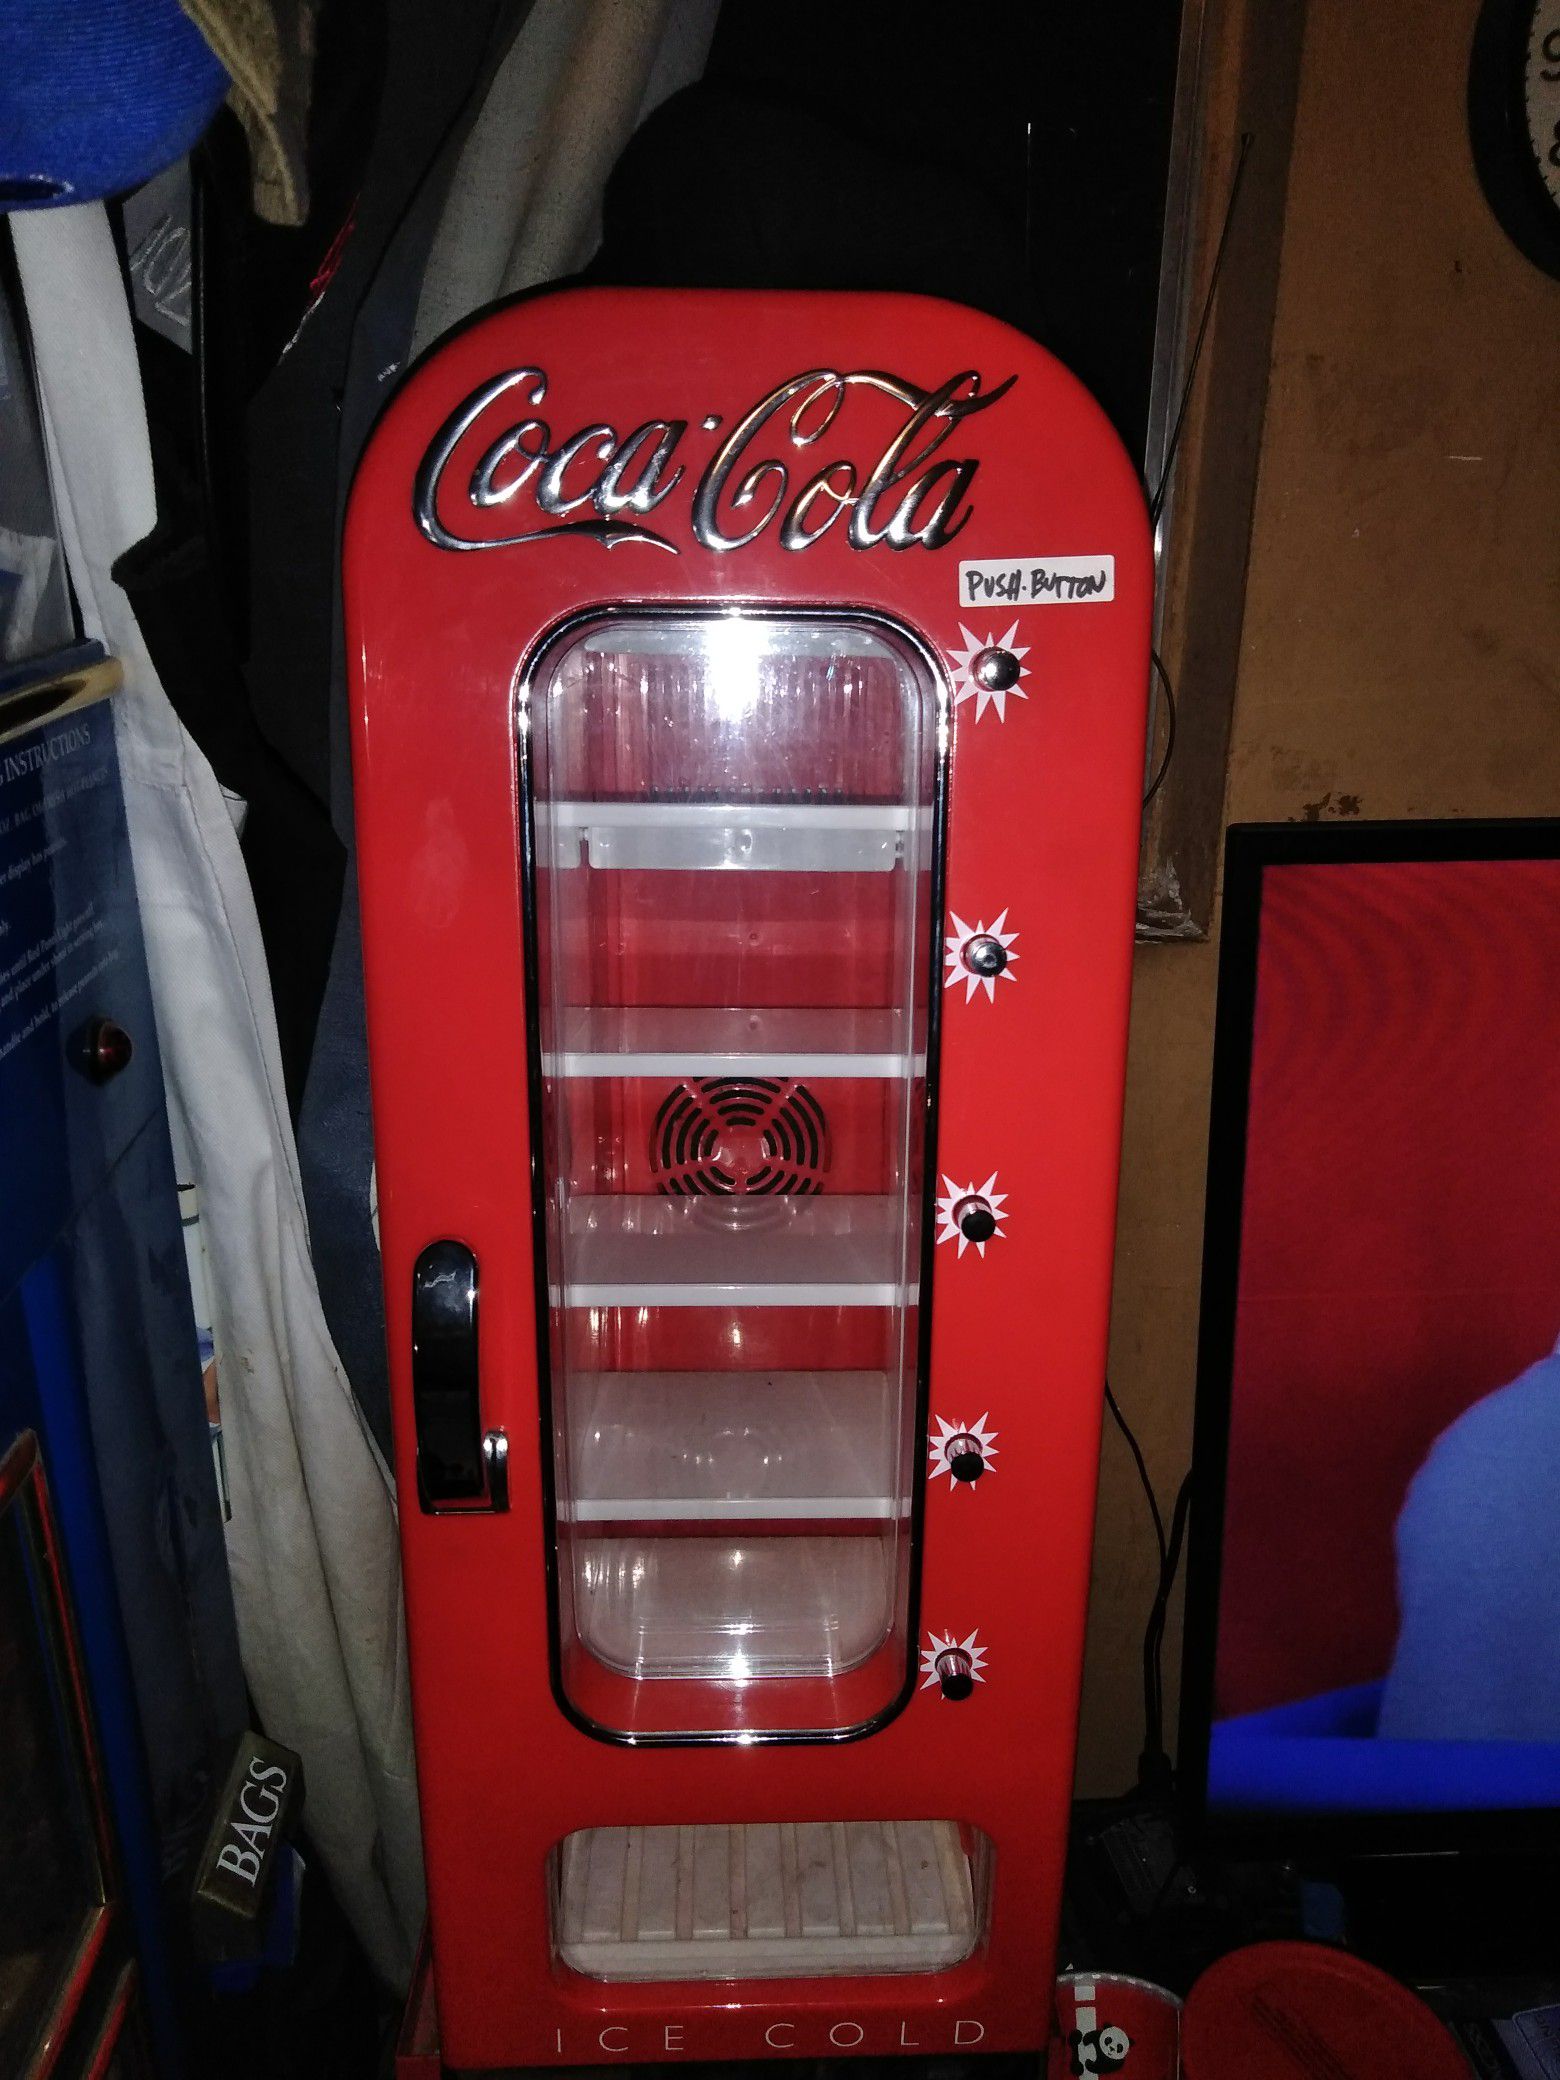 Coca Cola refrigerator not working